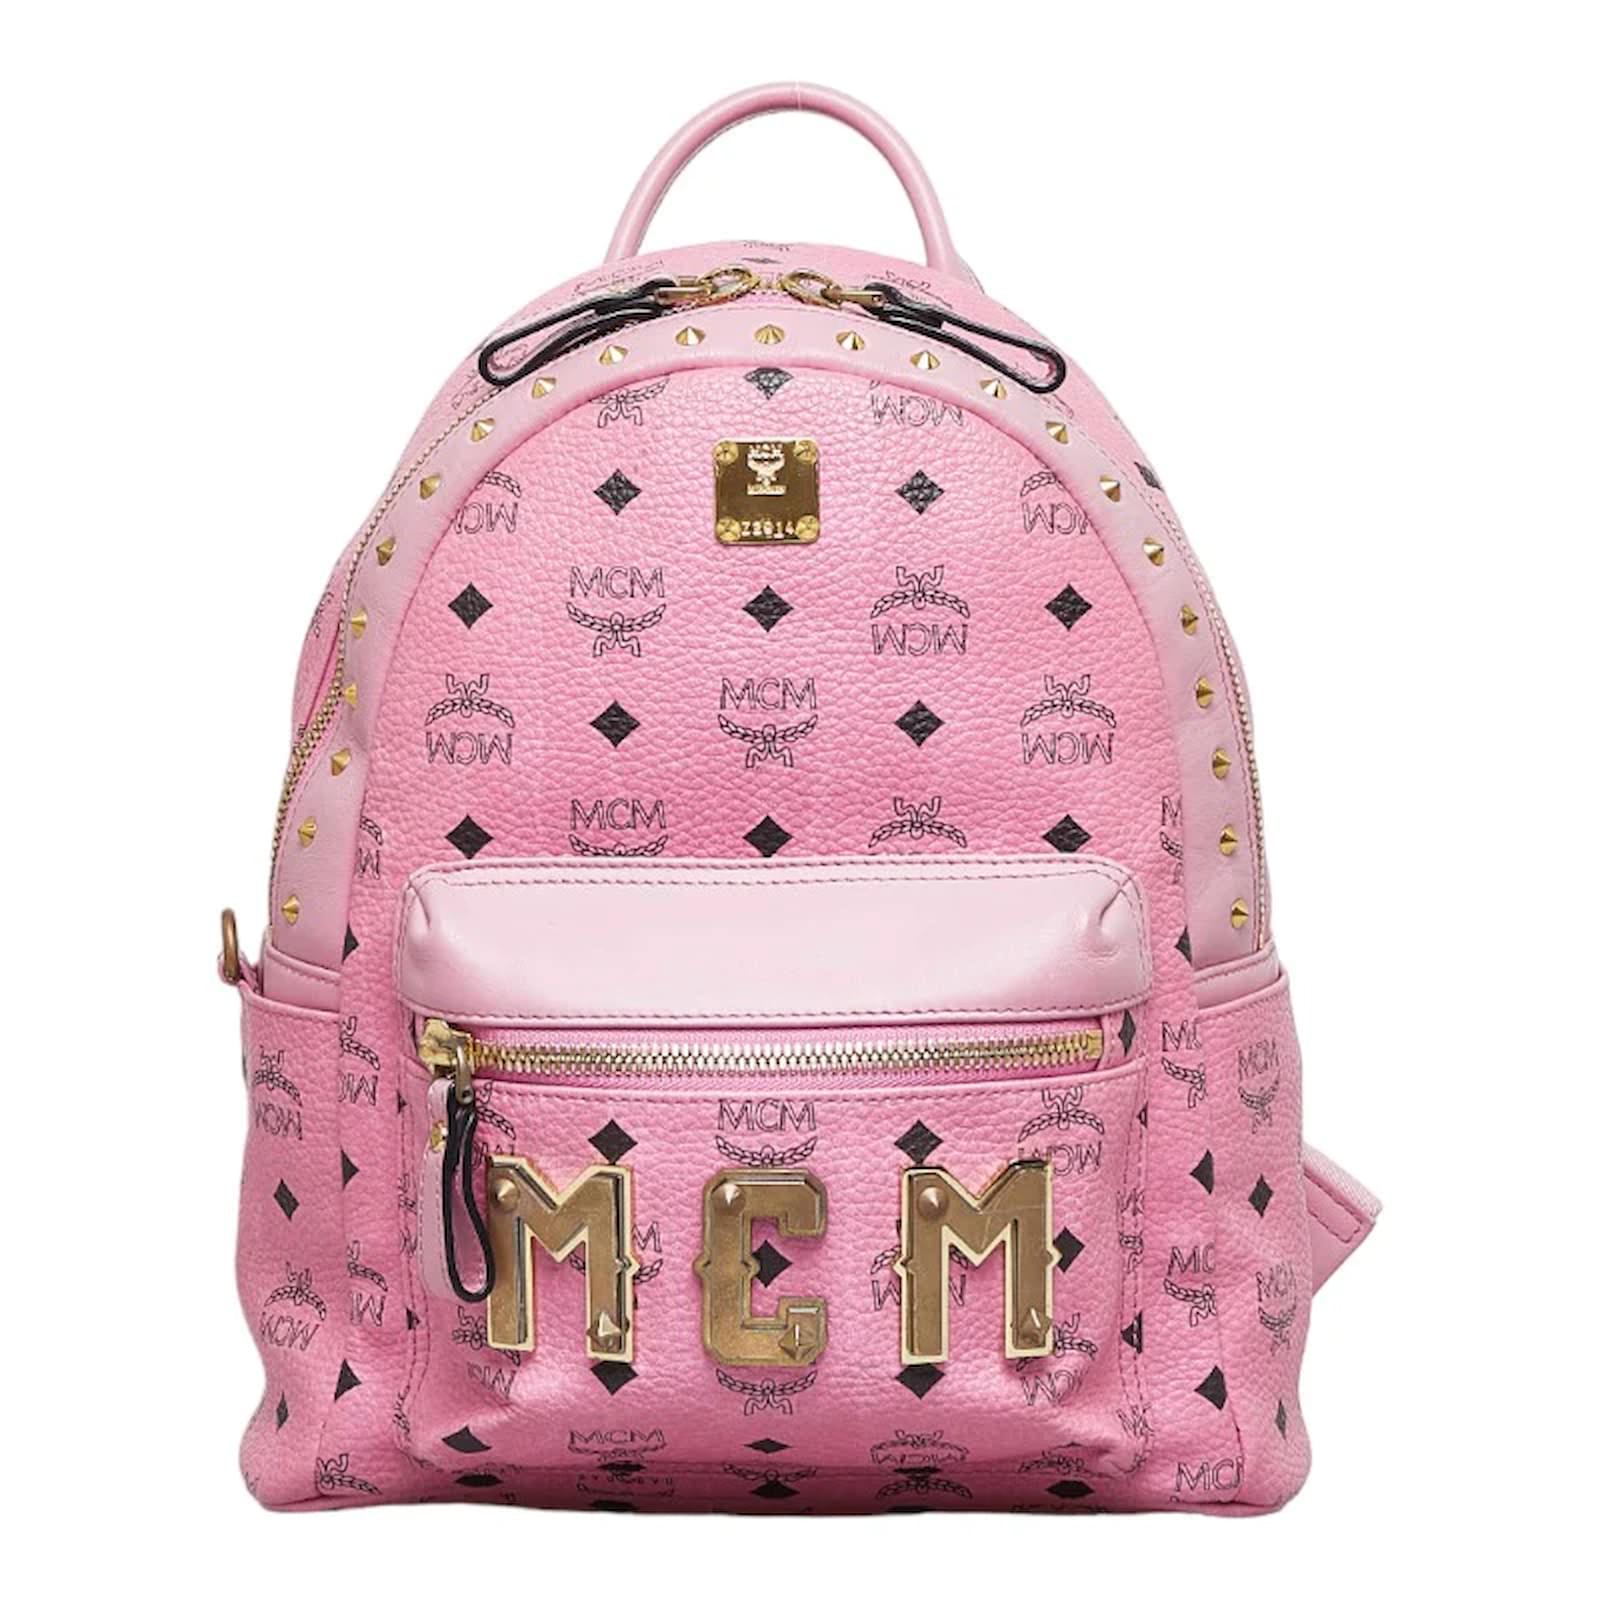 mcm backpack large